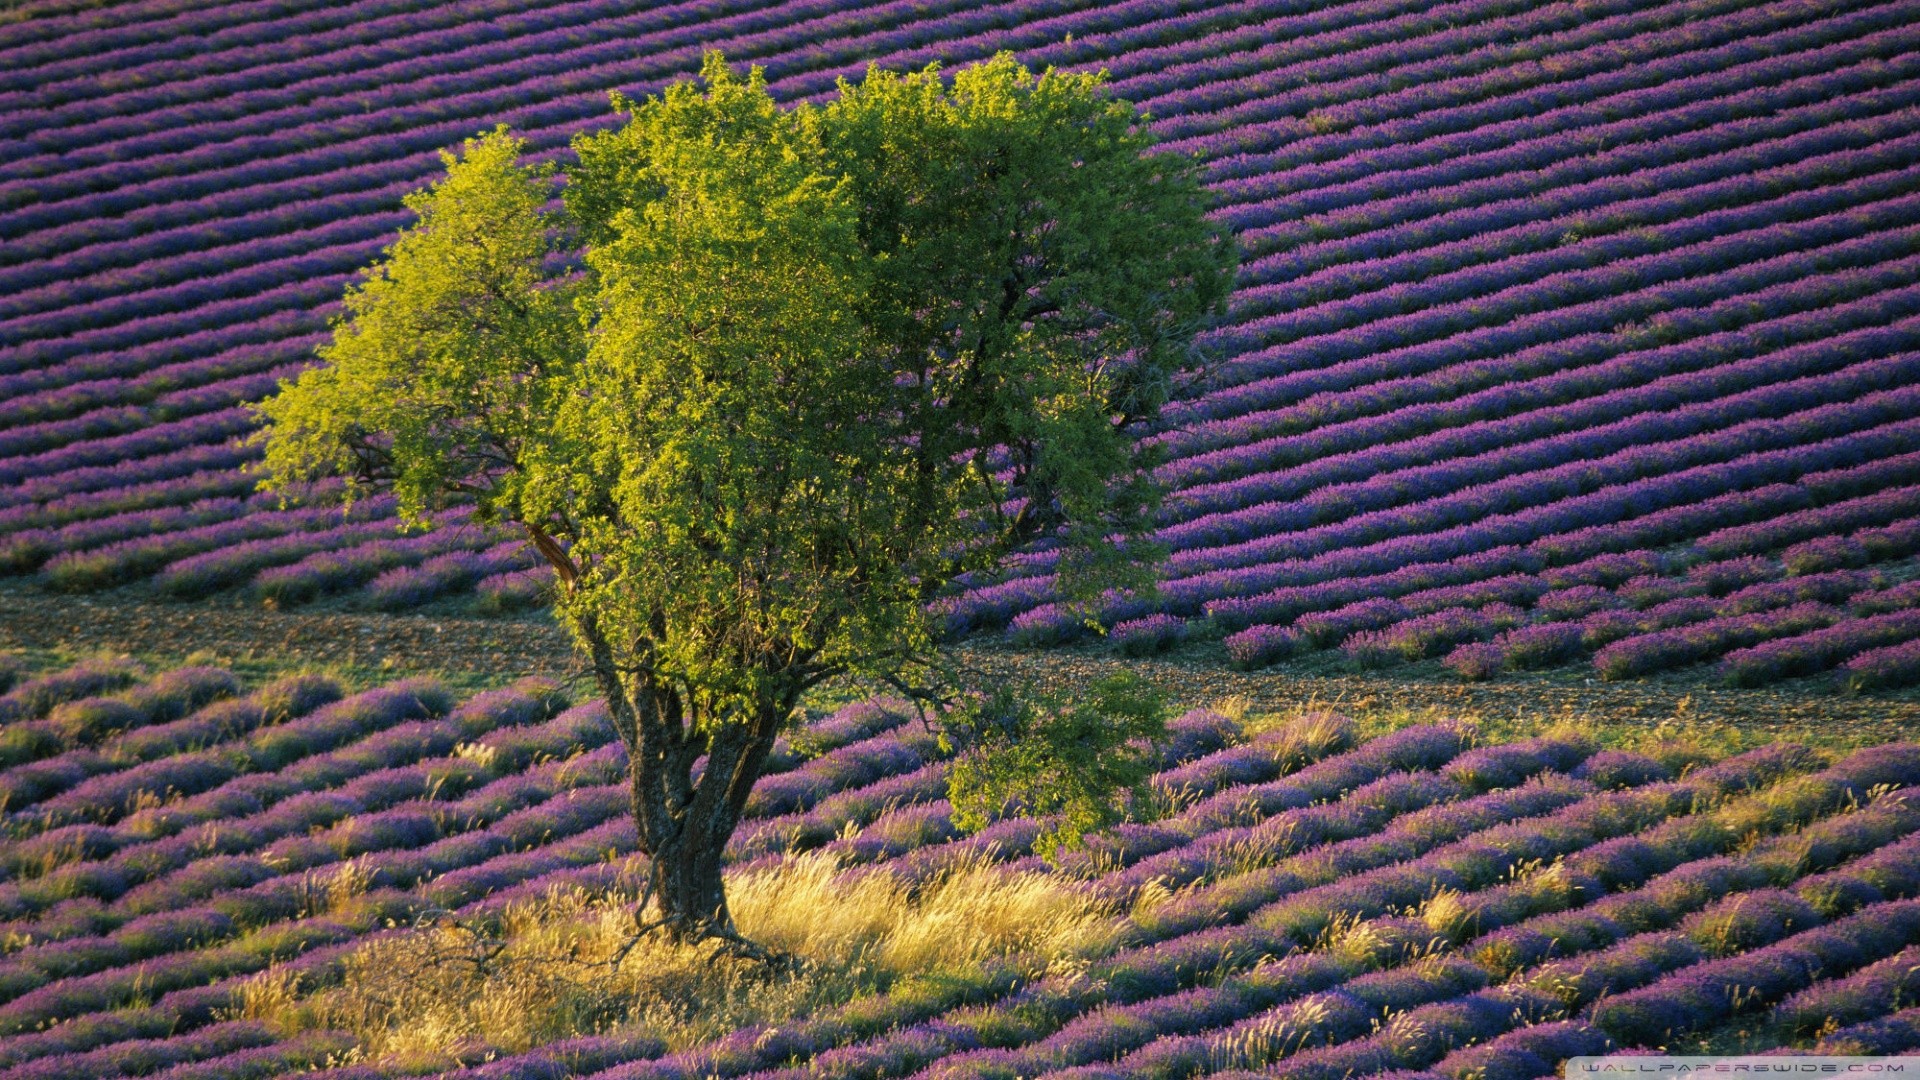 General 1920x1080 lavender field landscape trees purple flowers Provence France Agro (Plants) outdoors